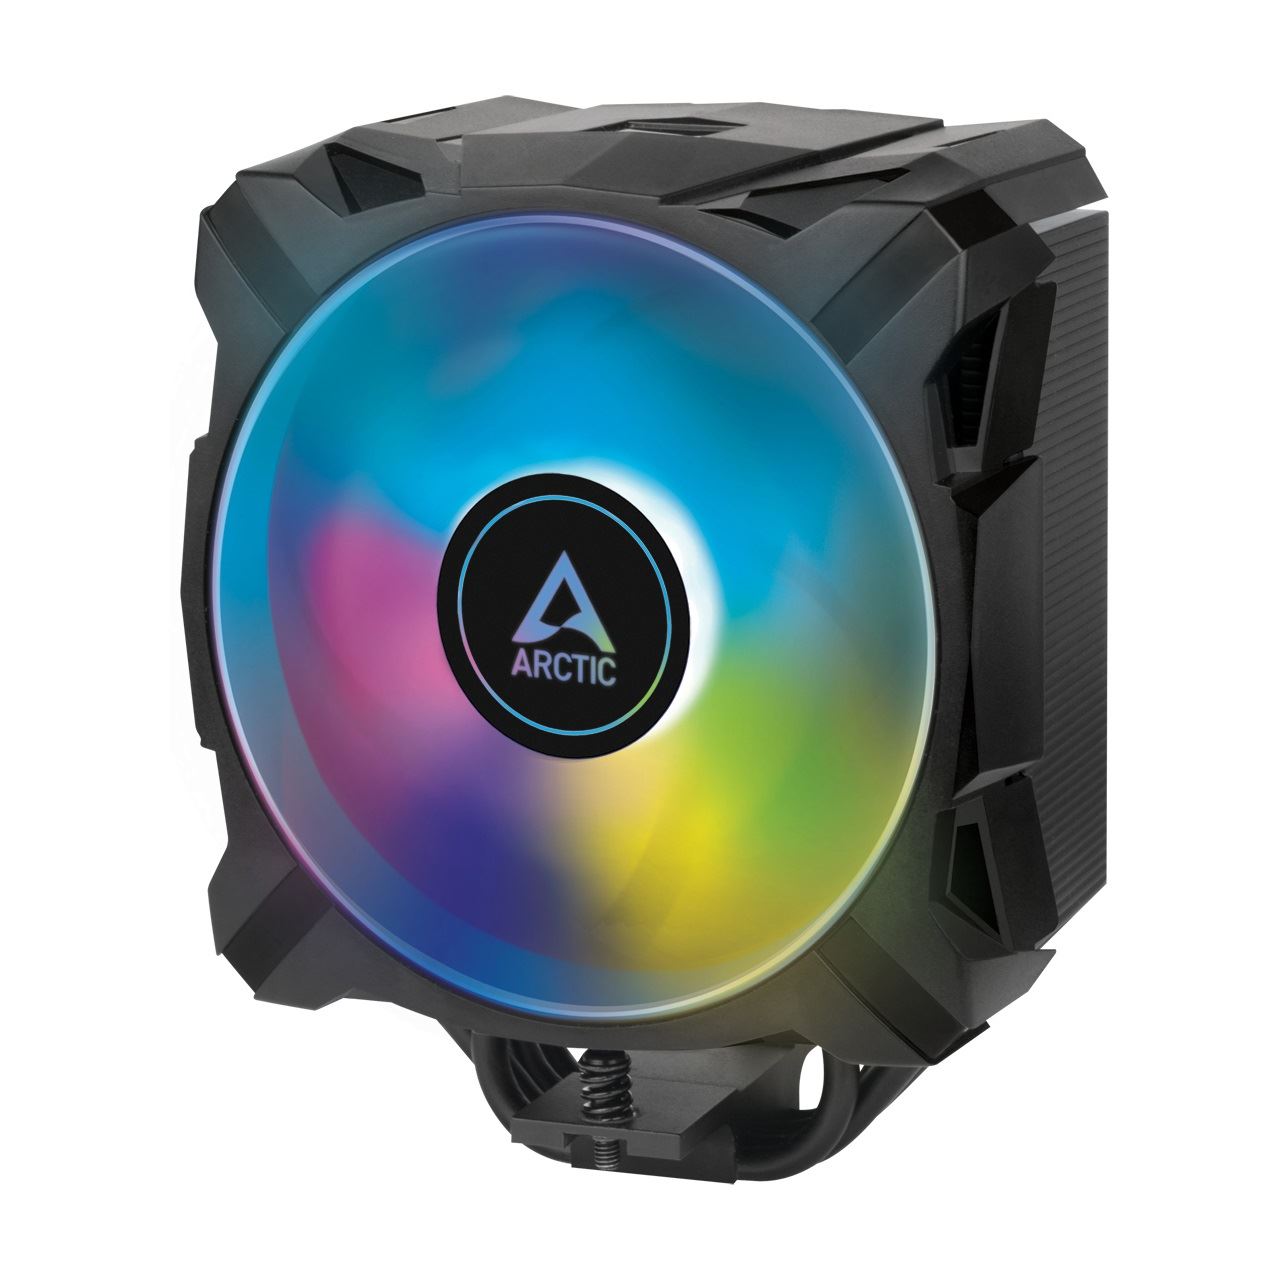 Arctic Freezer i35 A-RGB - Tower CPU Kühler für Intel mit A-RGB